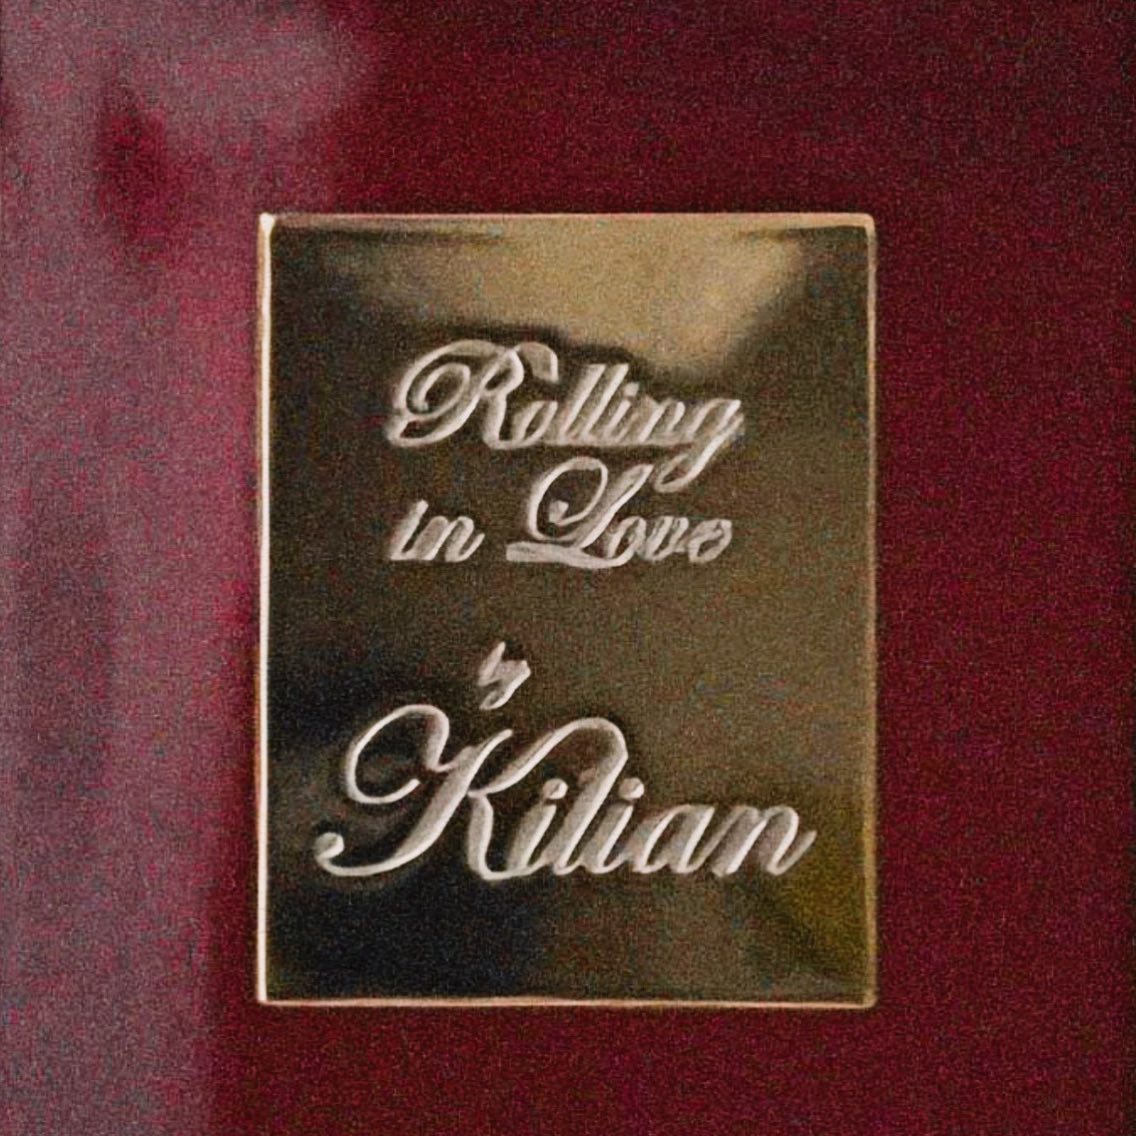 Aesthetic film photo of Rolling in Love by Kilian Paris perfume